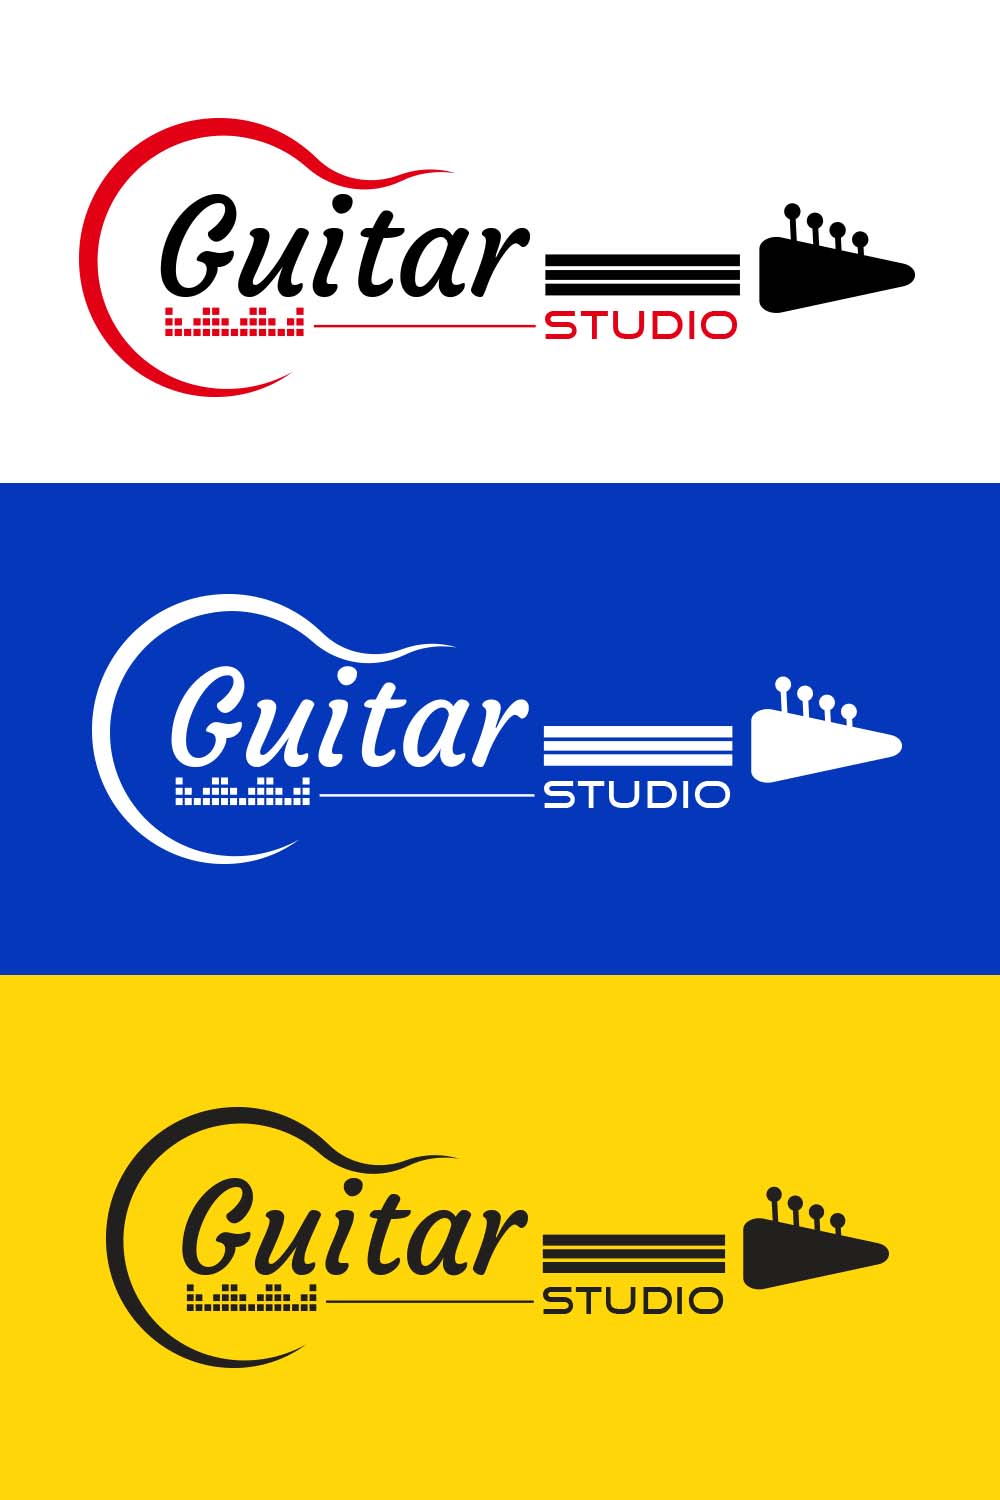 Guitar Logo Template Design pinterest image.